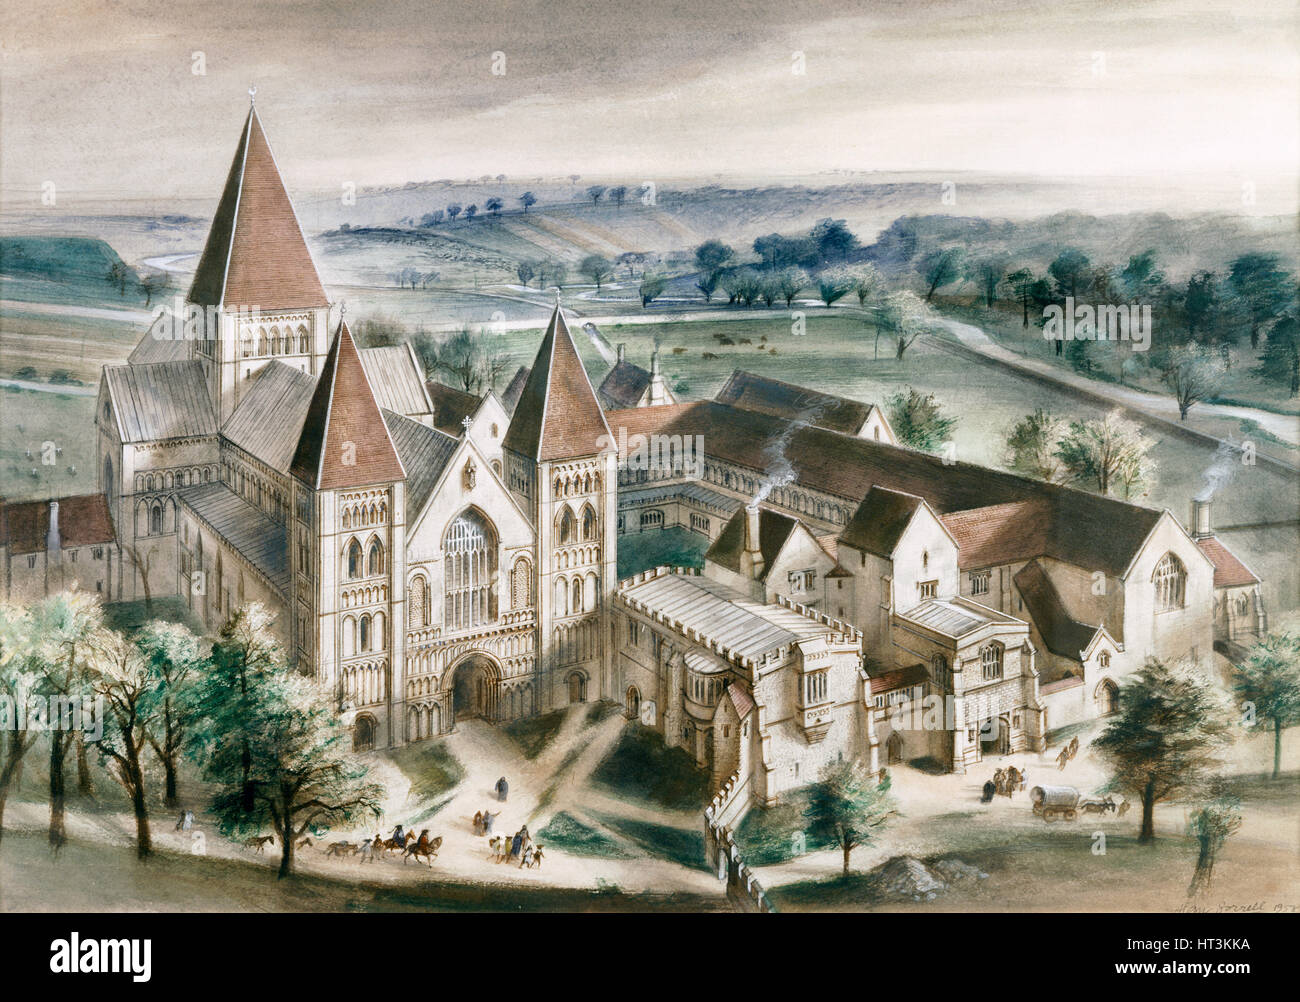 Castle Acre Priory, 1537, (c1990-2010). Artist: Ivan Lapper. Stock Photo